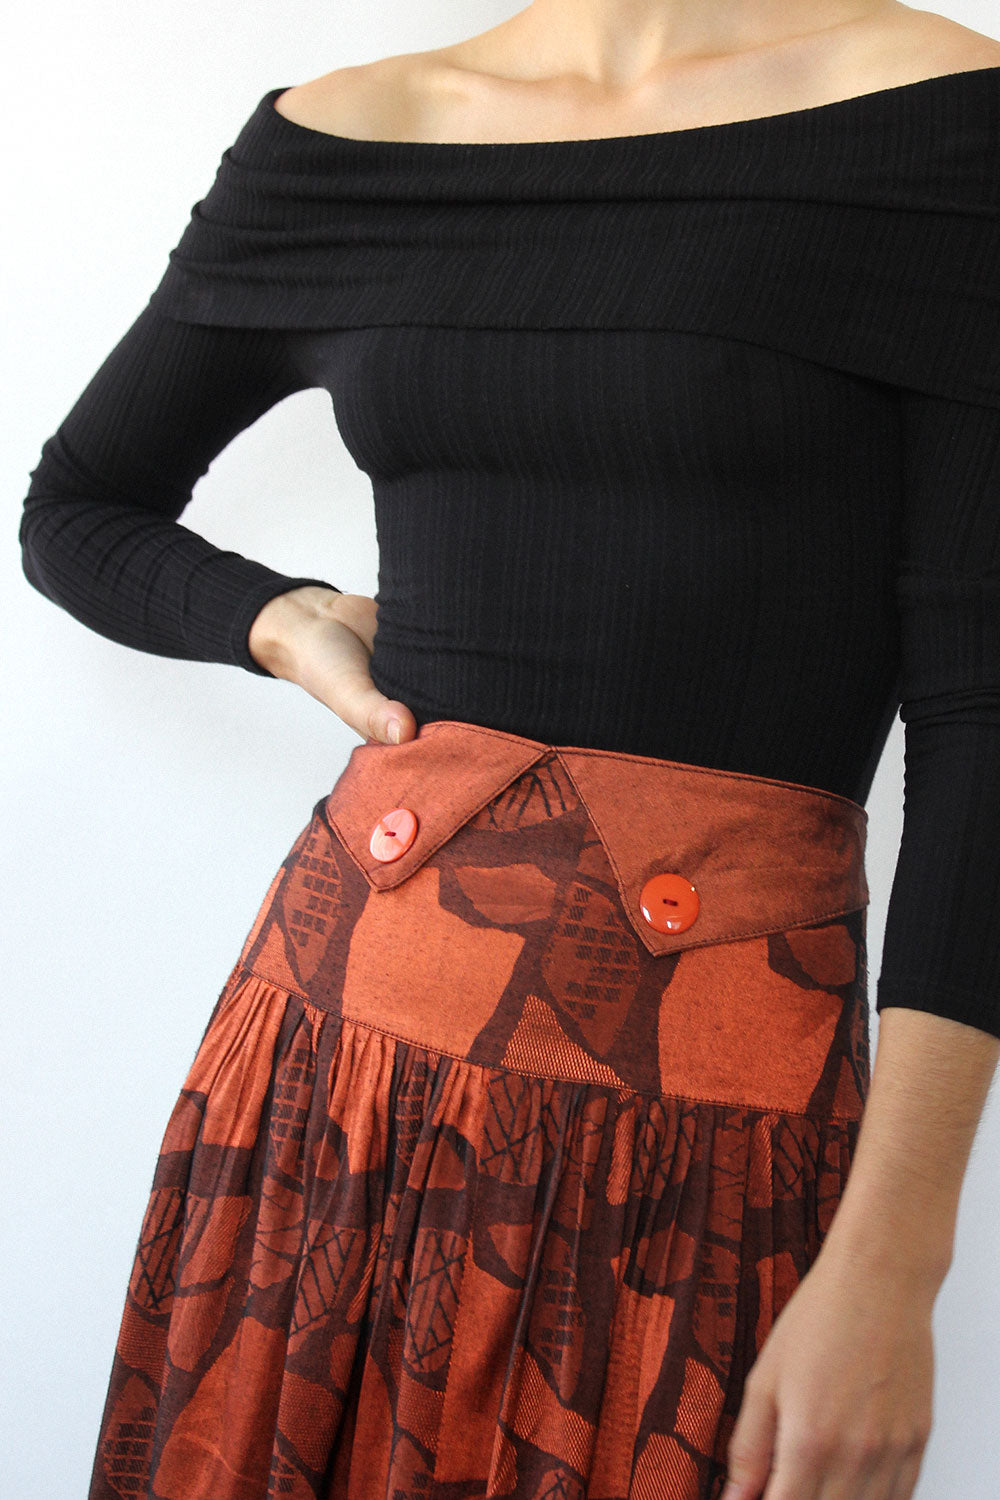 Brick Pattern Midi Skirt S/M